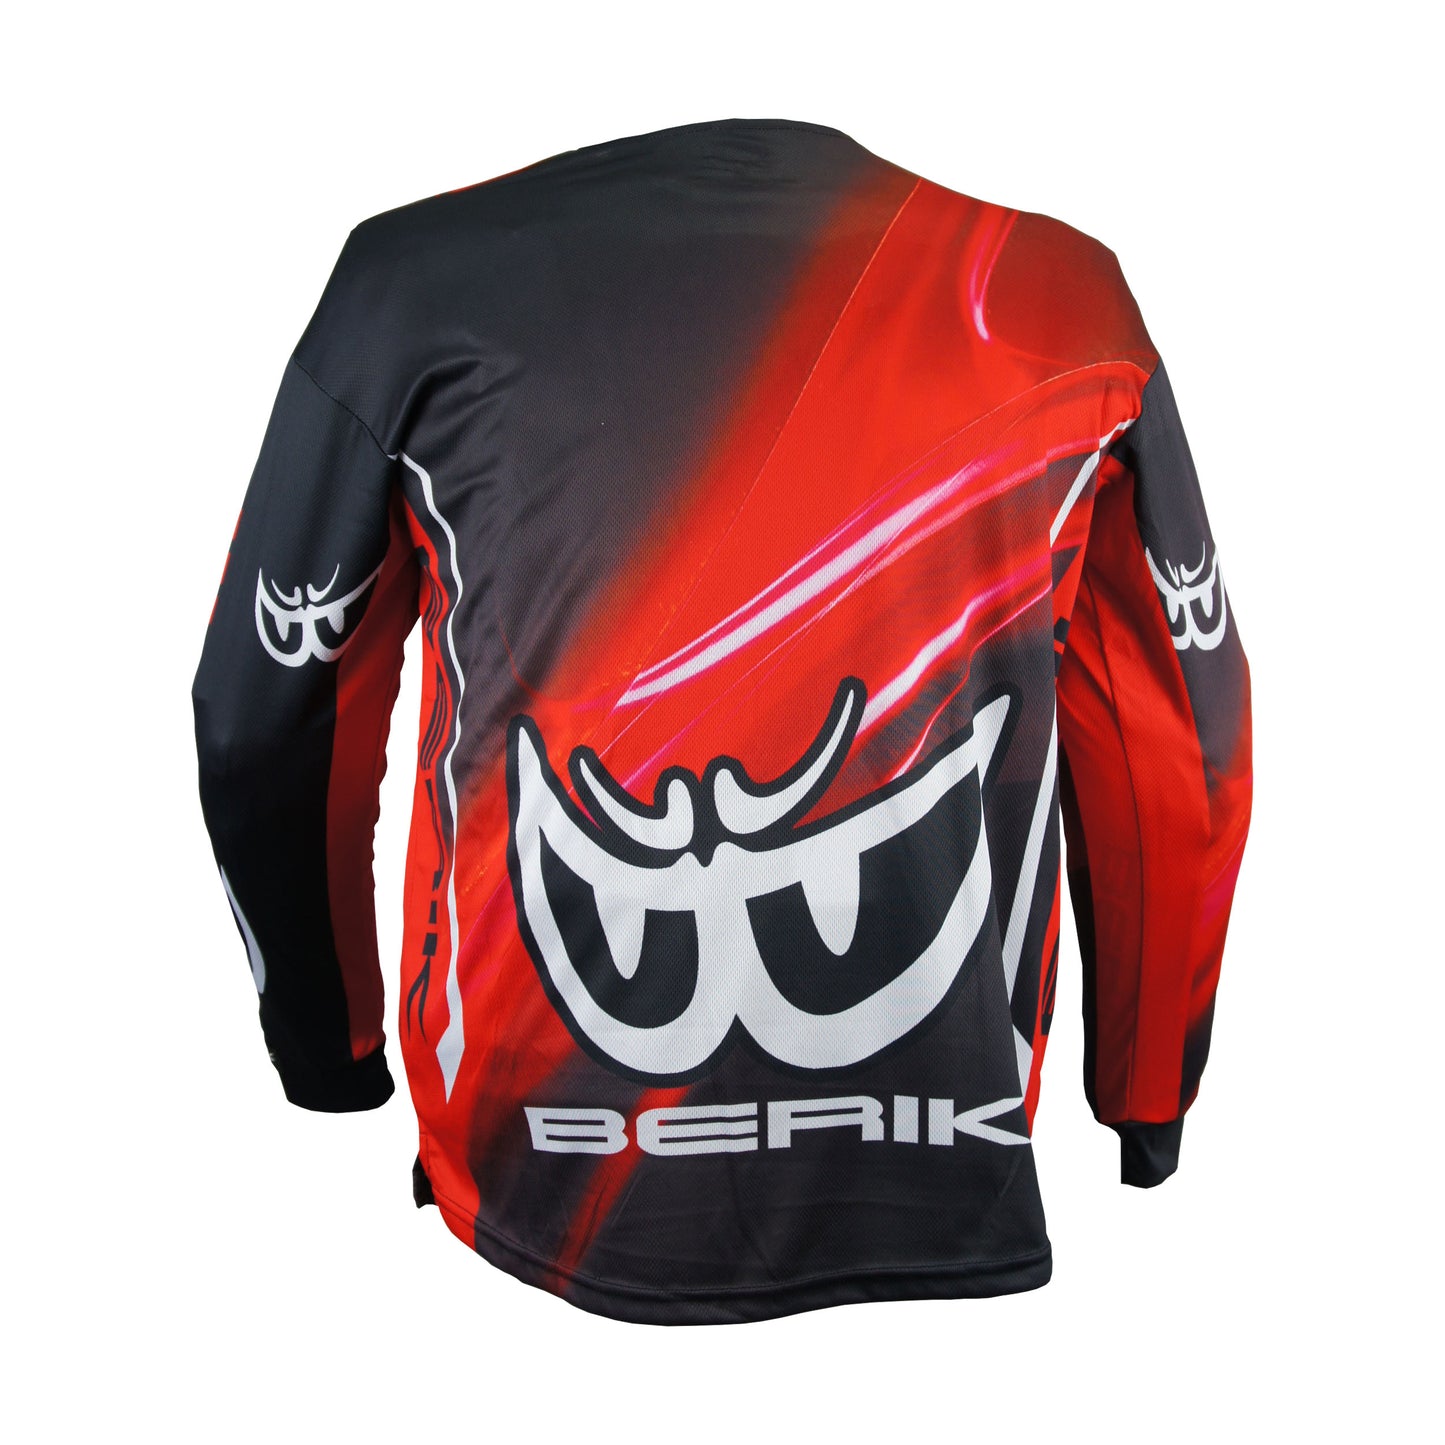 Pre-order sale JT-227301-BK RED BERIK MX jersey